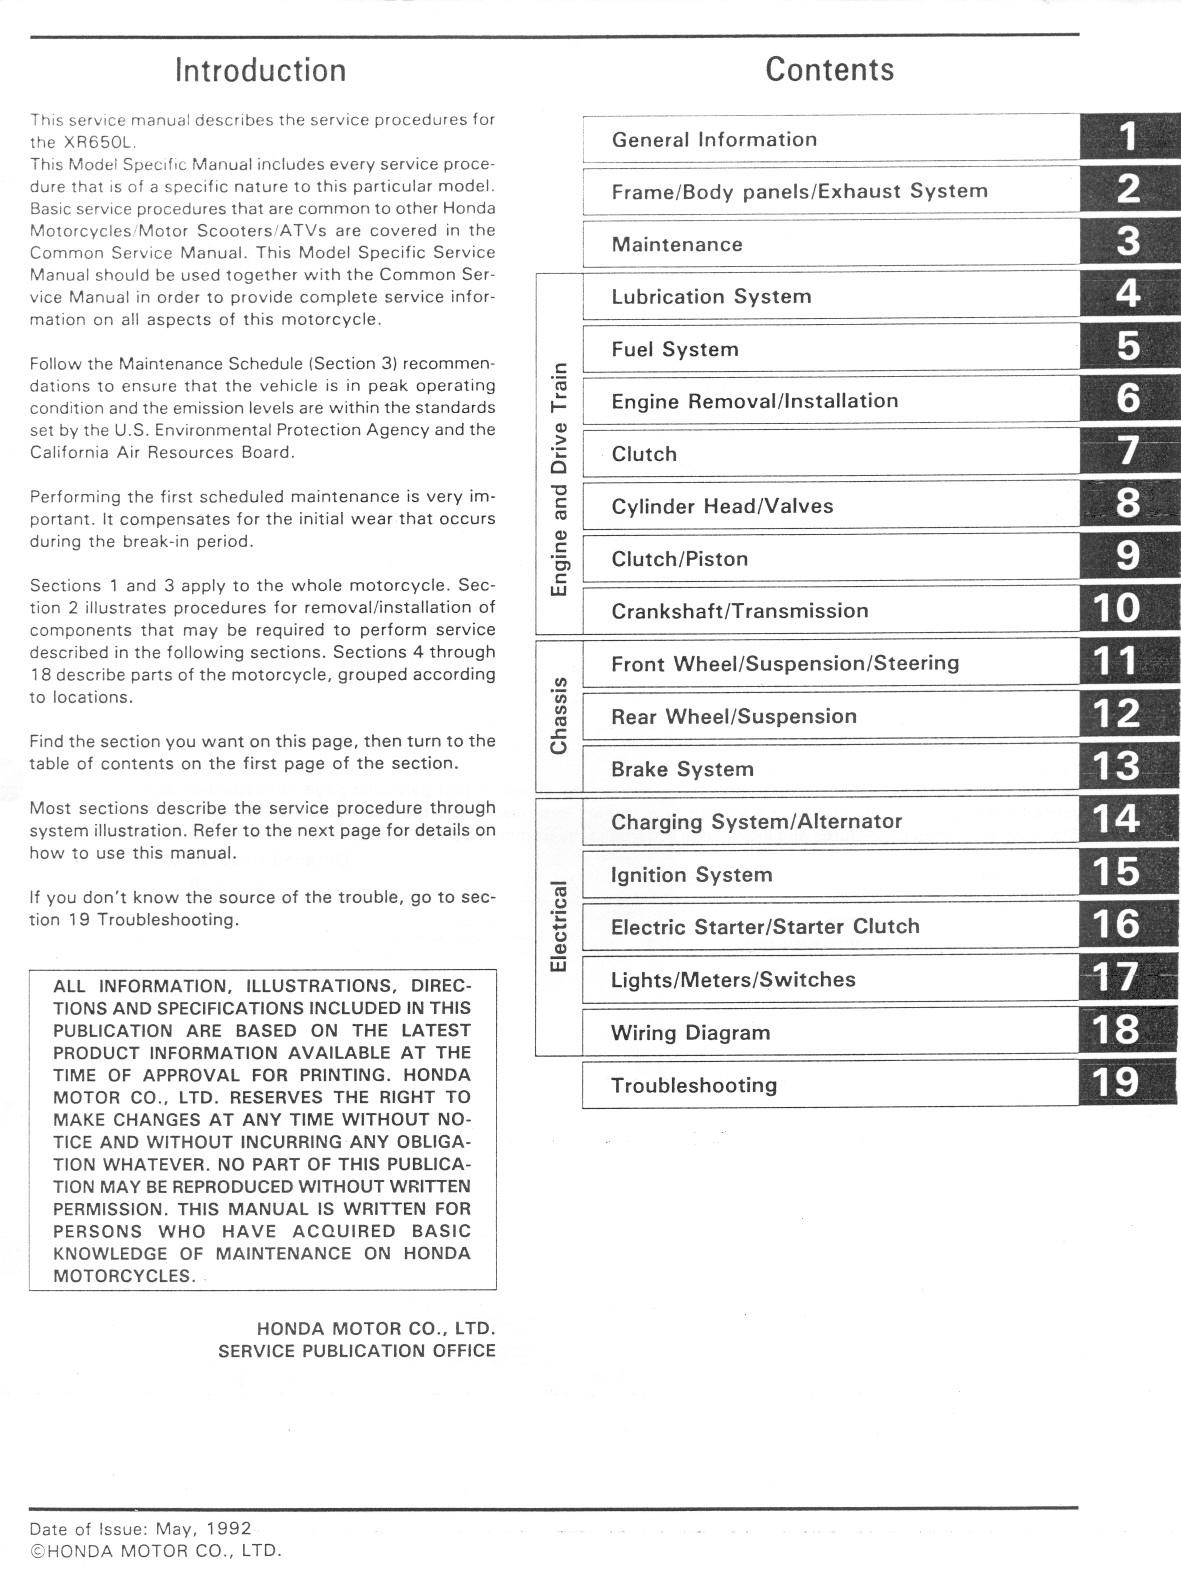 File:Honda XR650L Service Manual.pdf